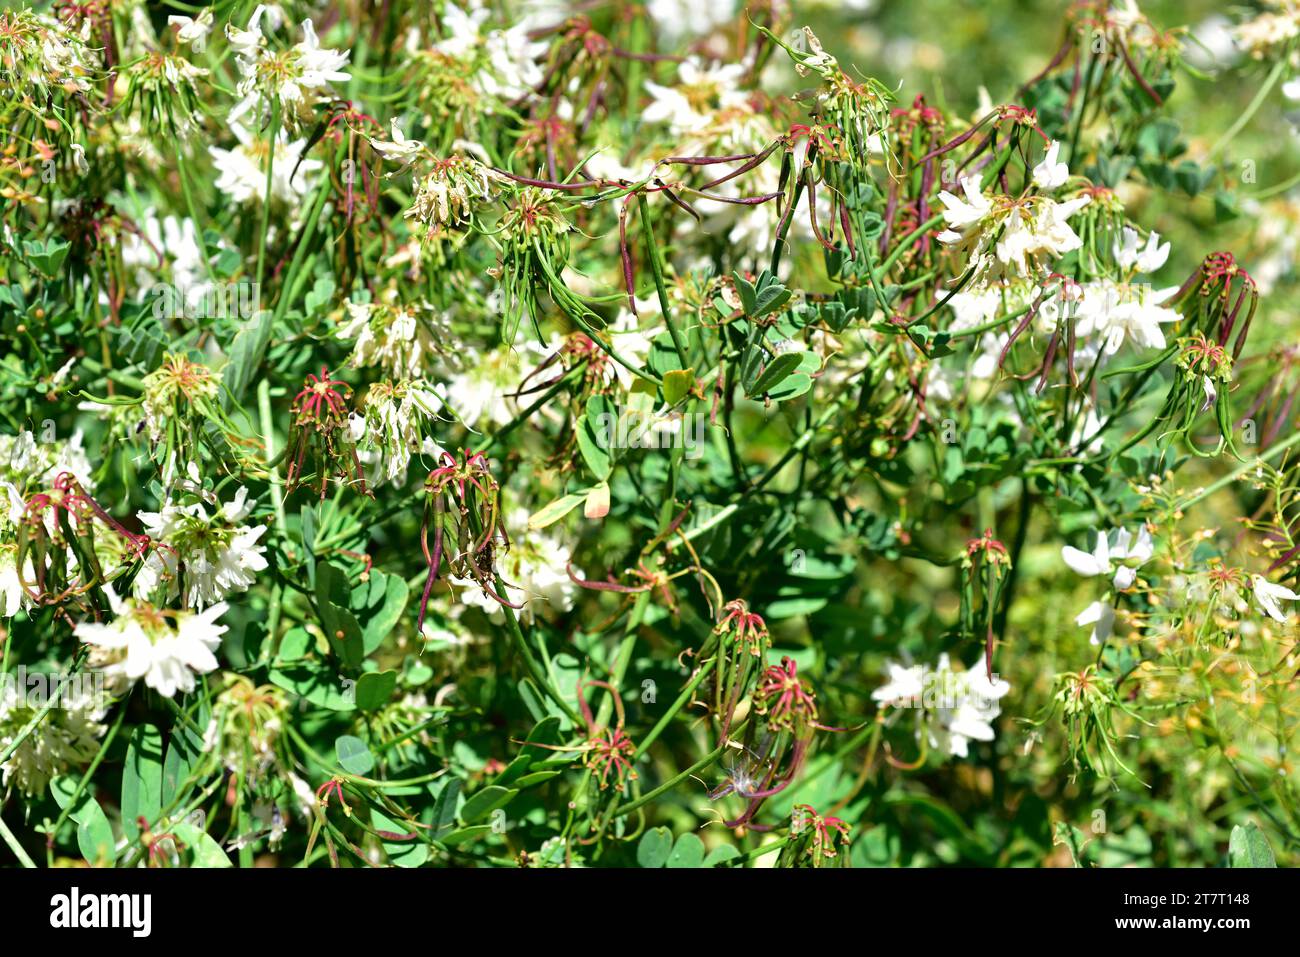 White crownvetch (Coronilla globosa or Securigera globosa) is a shrub endemic to Crete, Greece. Flowers and fruits (legumes). Stock Photo